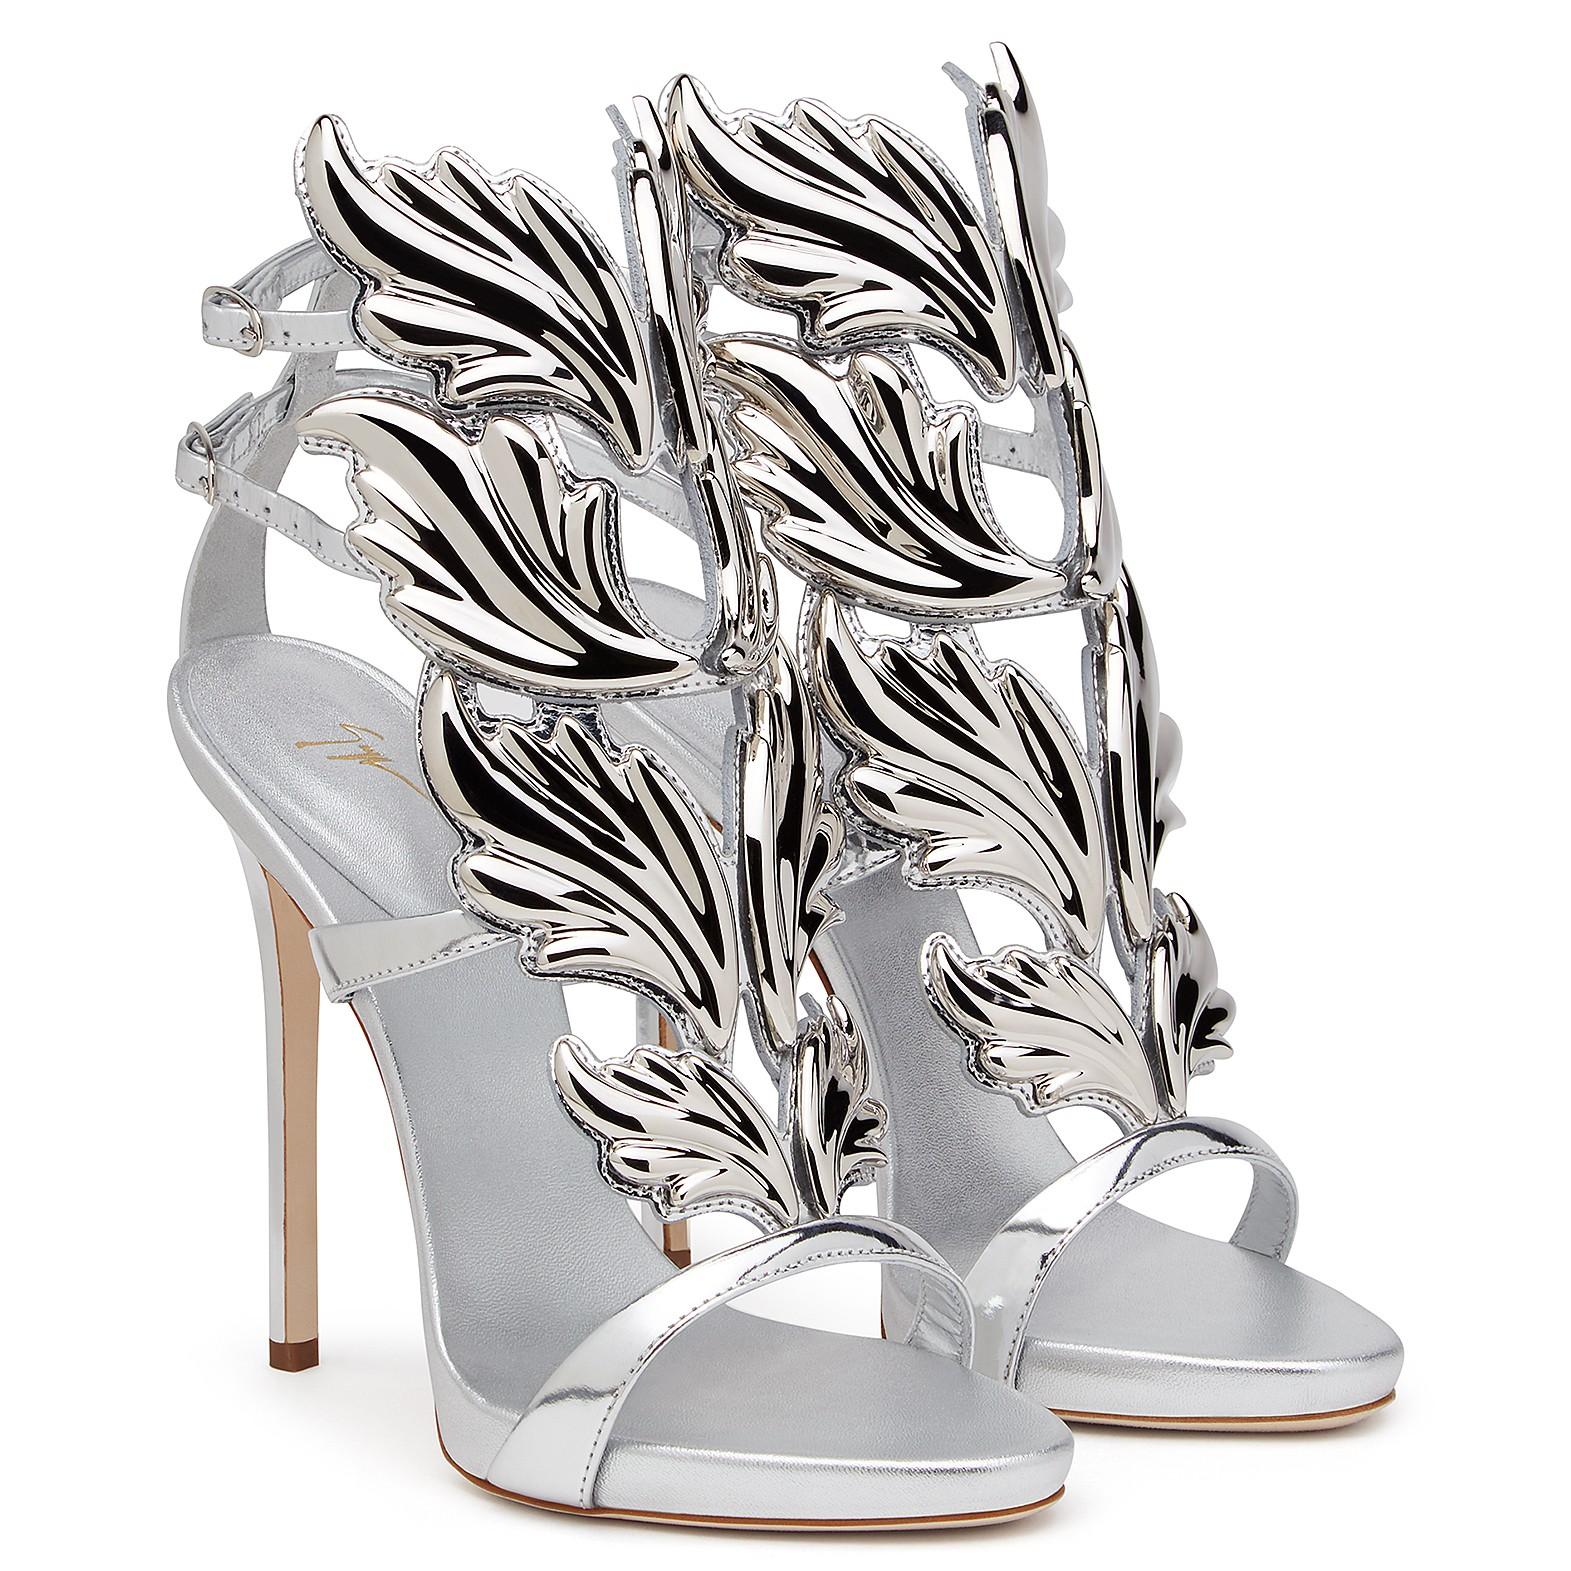 Women's Giuseppe Zanotti NEW Silver Patent Metal Cruel Evening Sandals Heels in Box